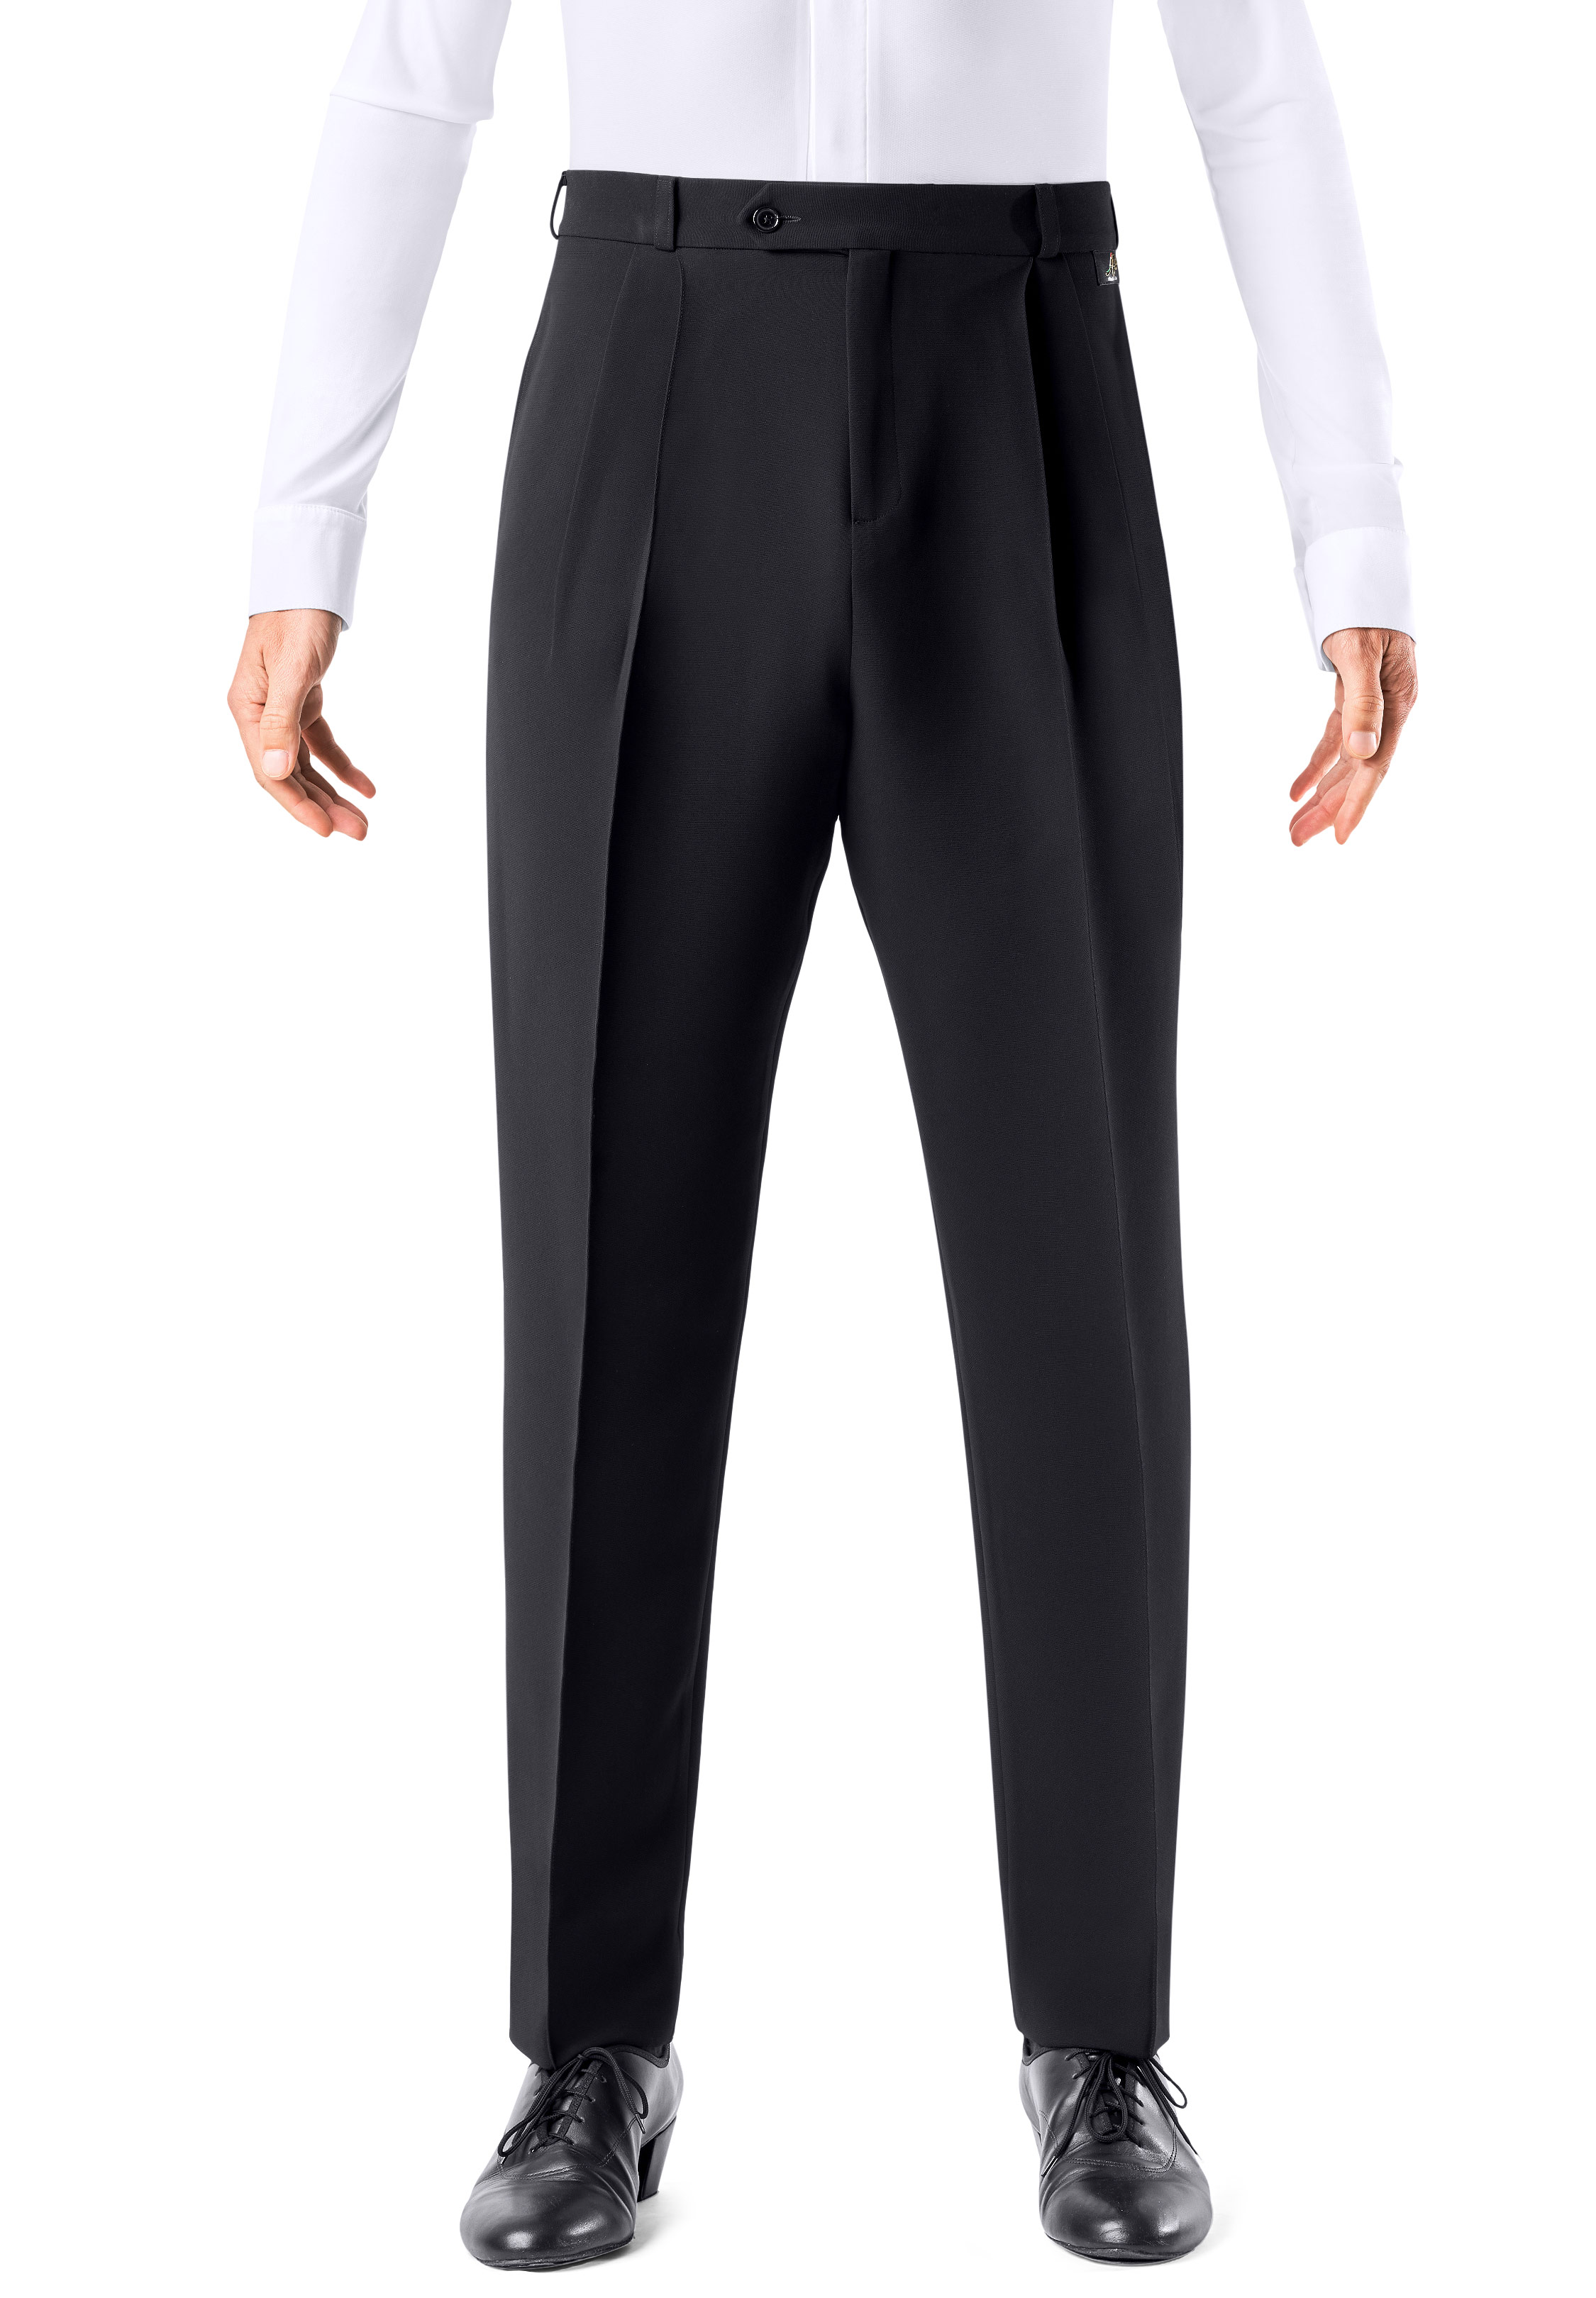 Formal Trouser: Check Men Light Grey Cotton Blend Formal Trouser on Cliths